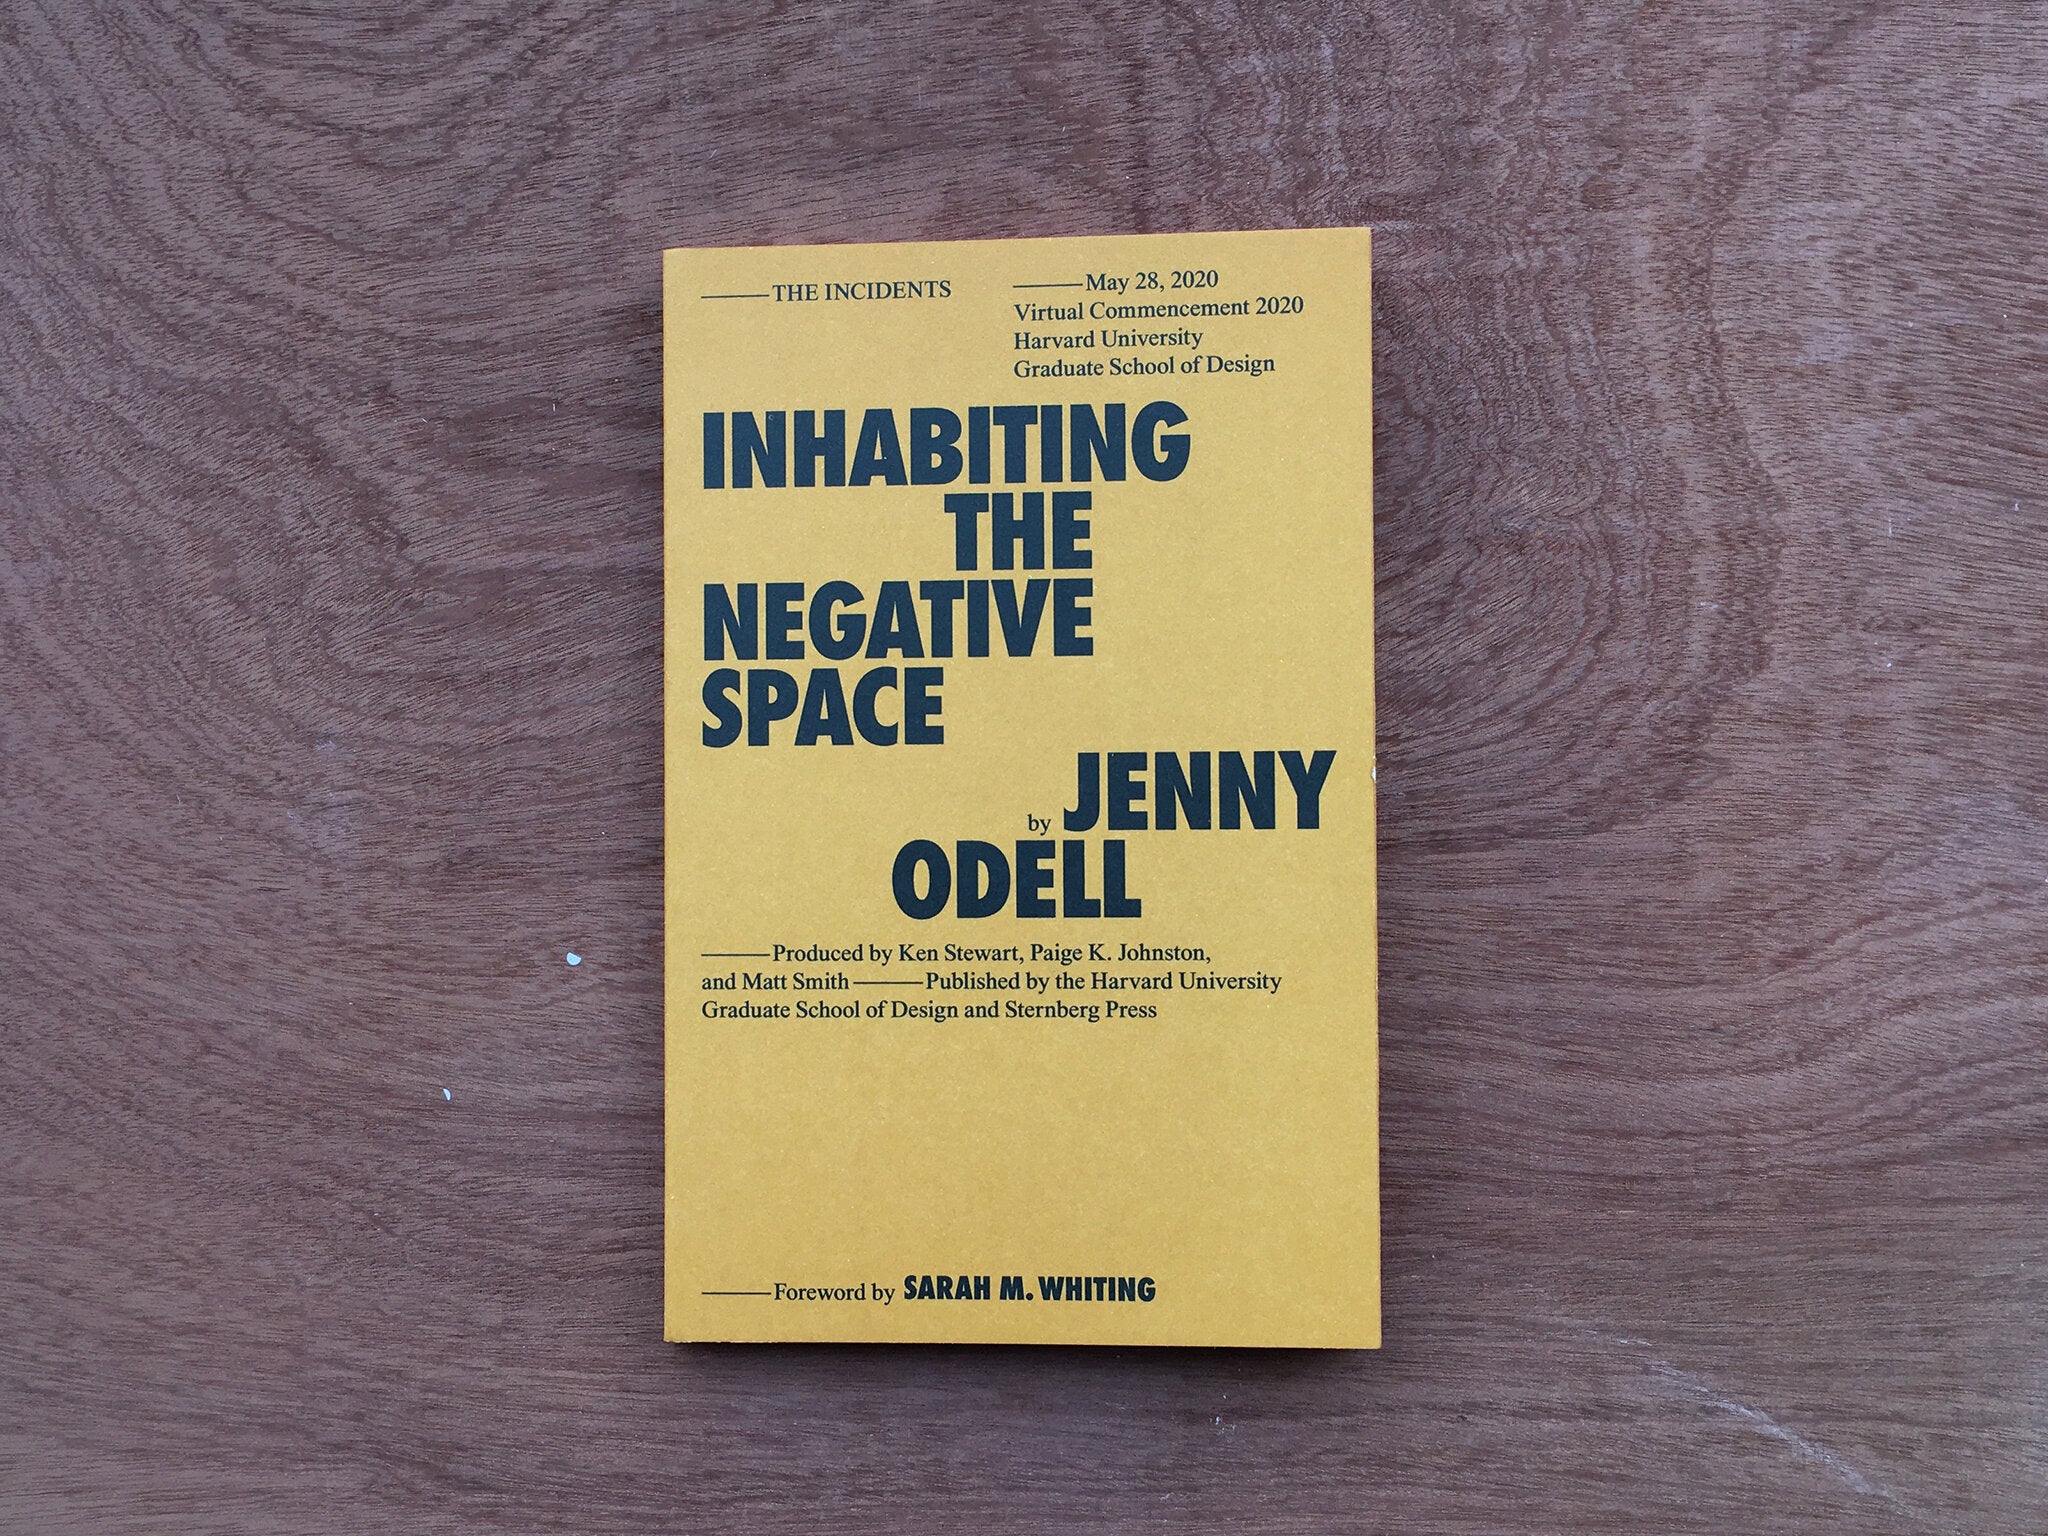 INHABITING THE NEGATIVE SPACE by Jenny Odell